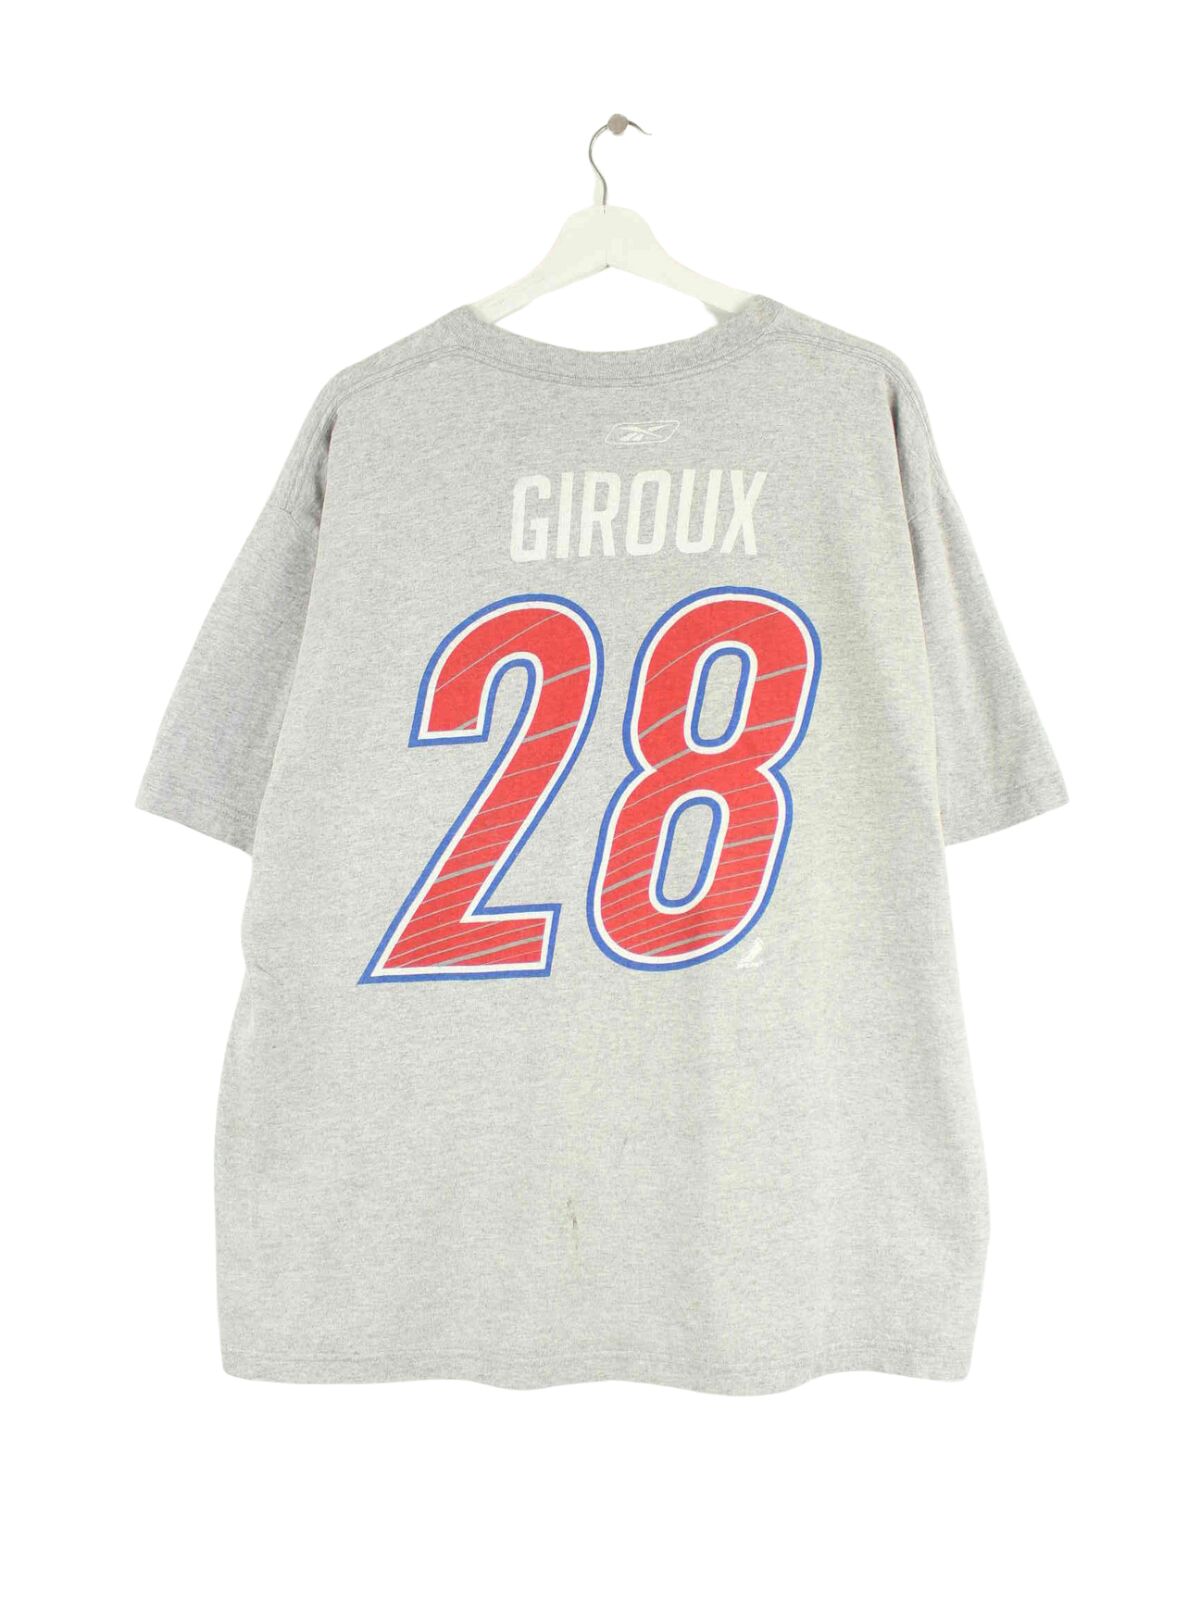 Reebok NHL All Stars Giroux #28 Print T-Shirt Grau XL (back image)